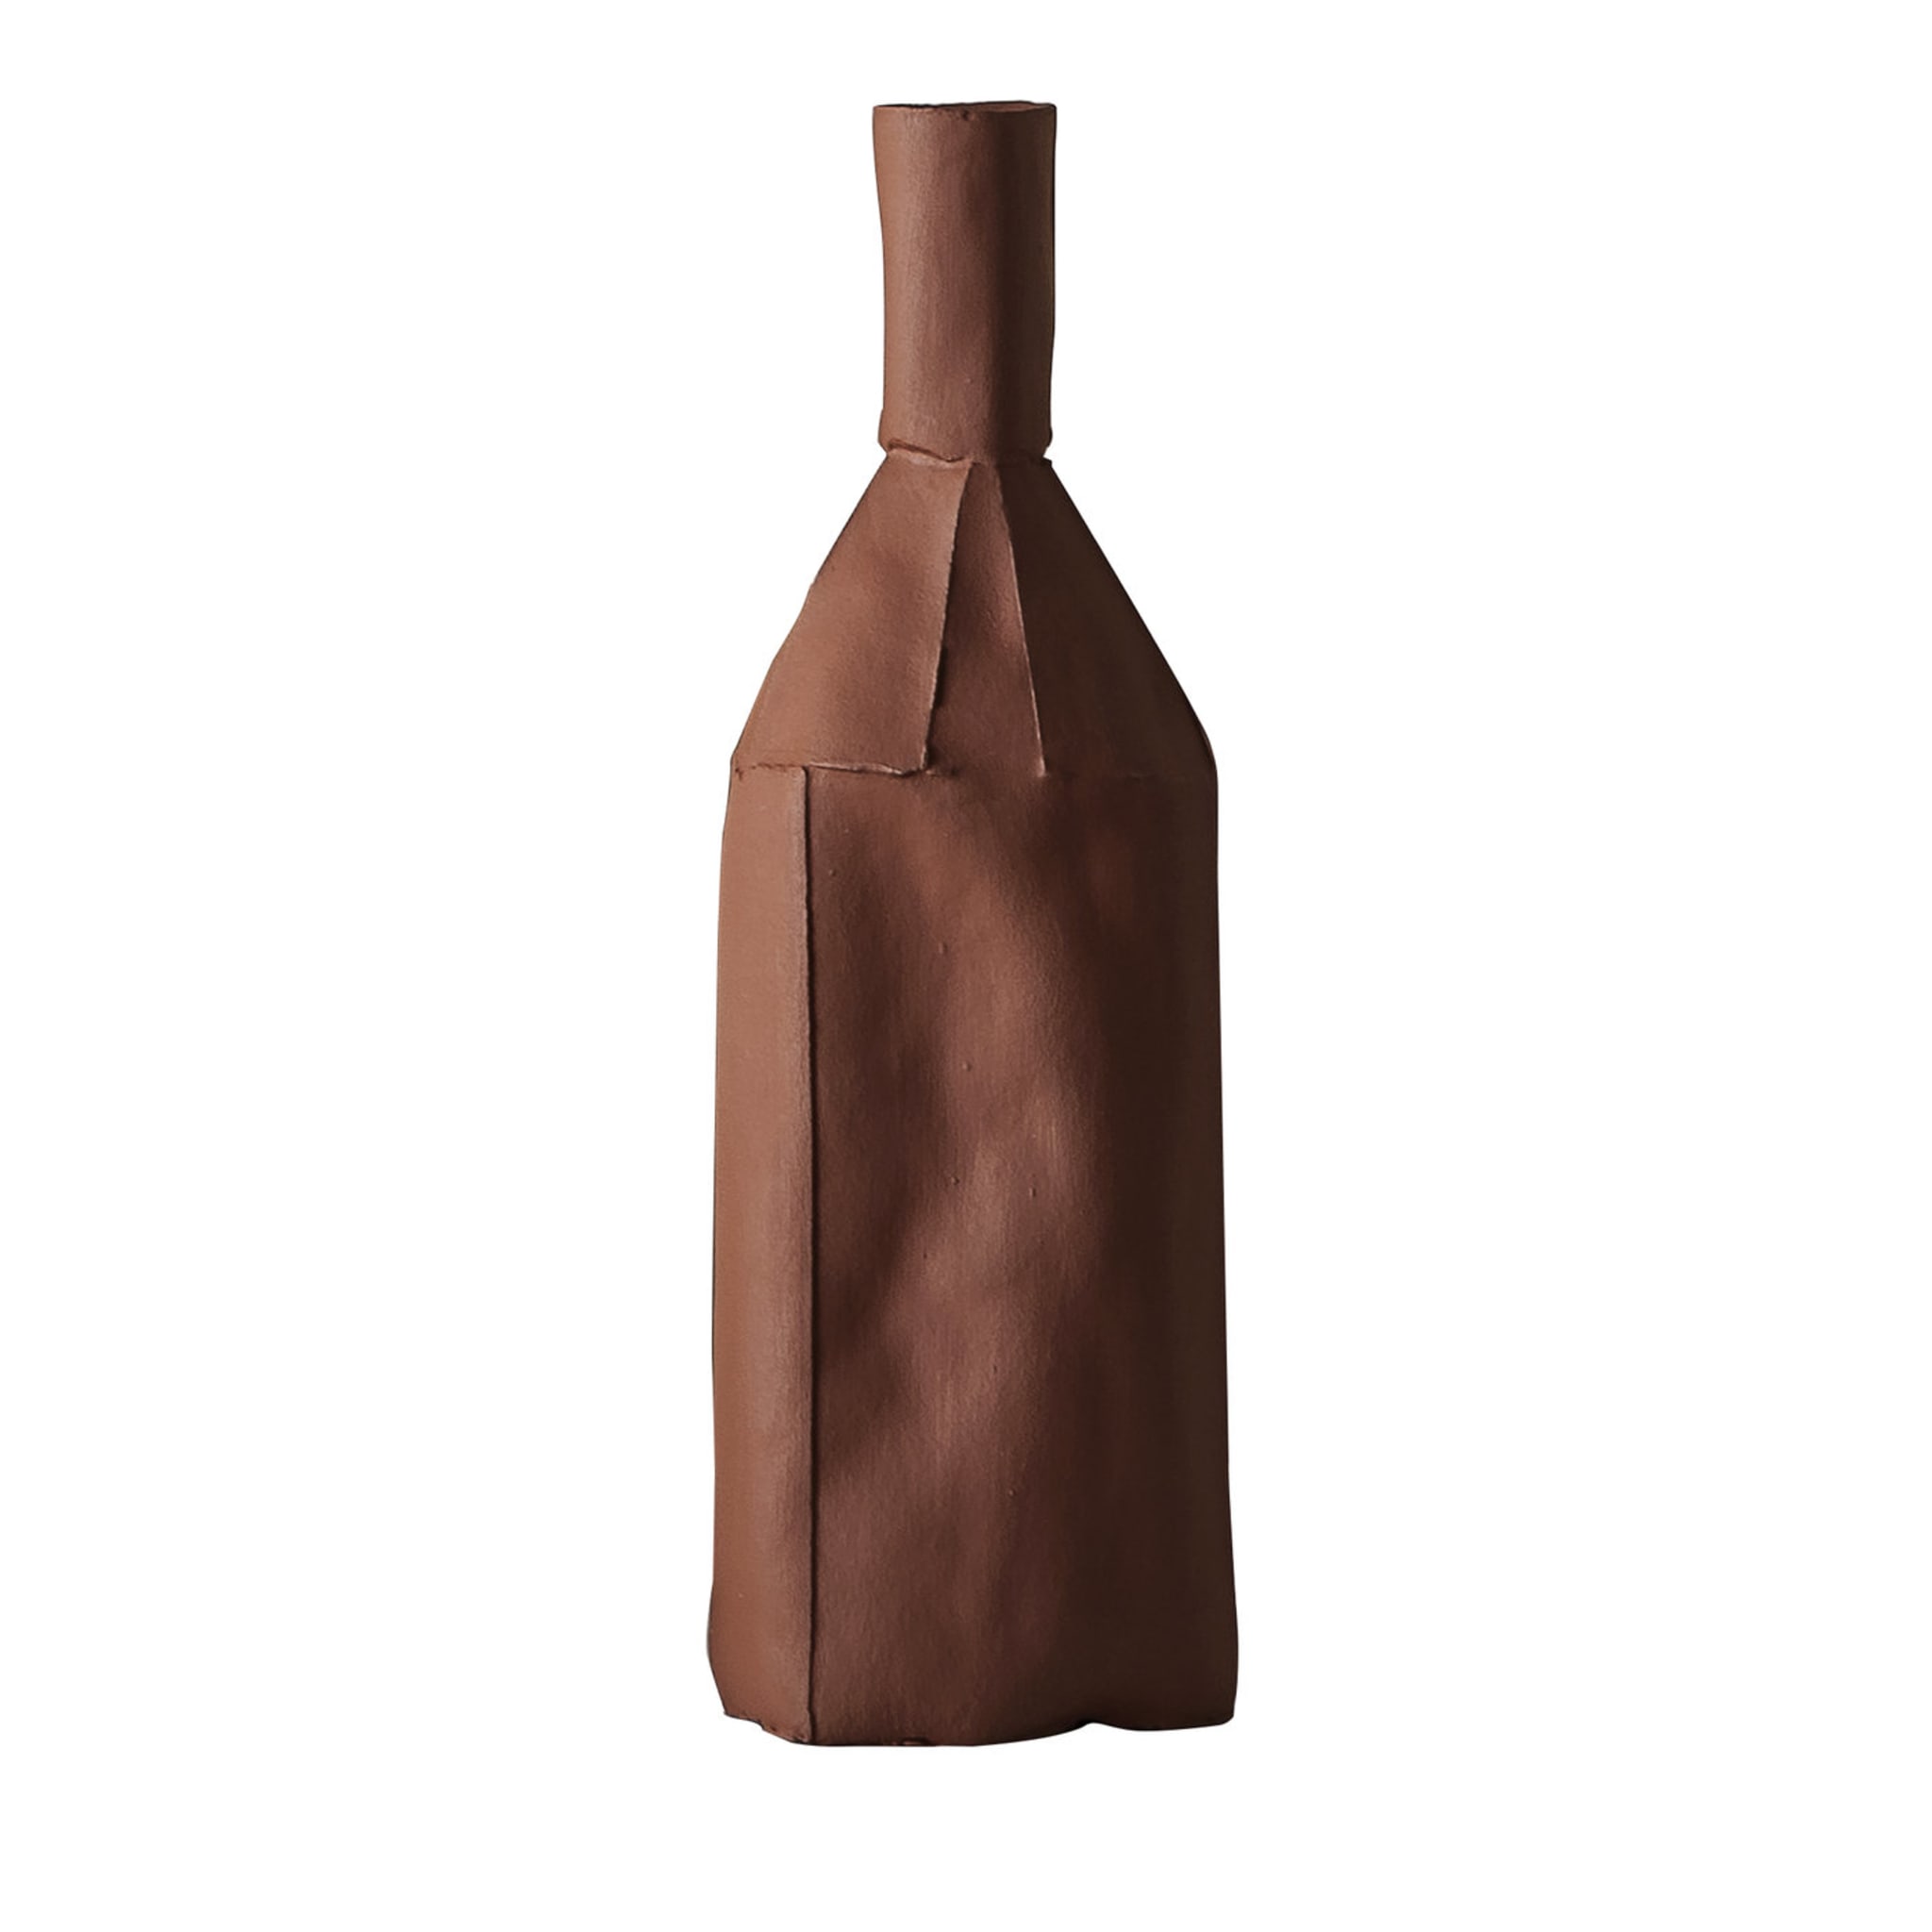 Cartocci Liscia Maroon Decorative Bottle - Main view